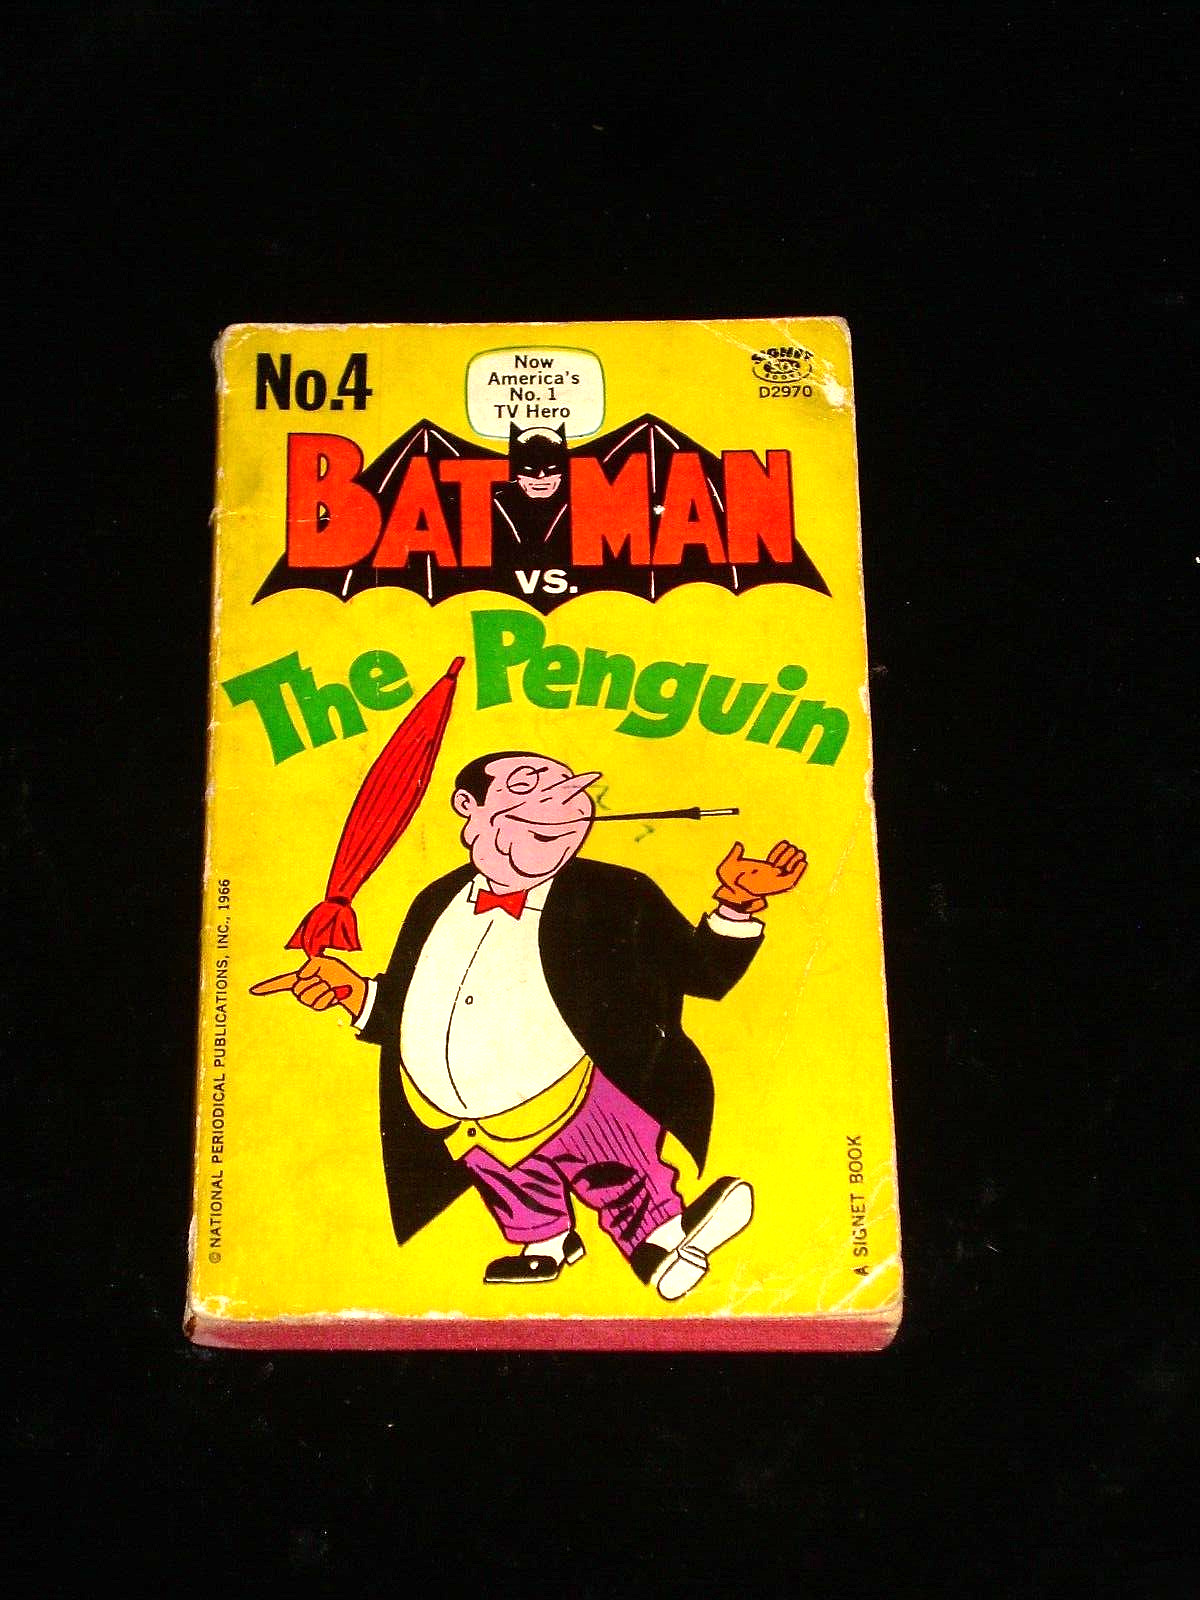 BATMAN vs THE PENGUIN #4 VINTAGE 1966 SIGNET PAPERBACK BOOK 1st PRINT